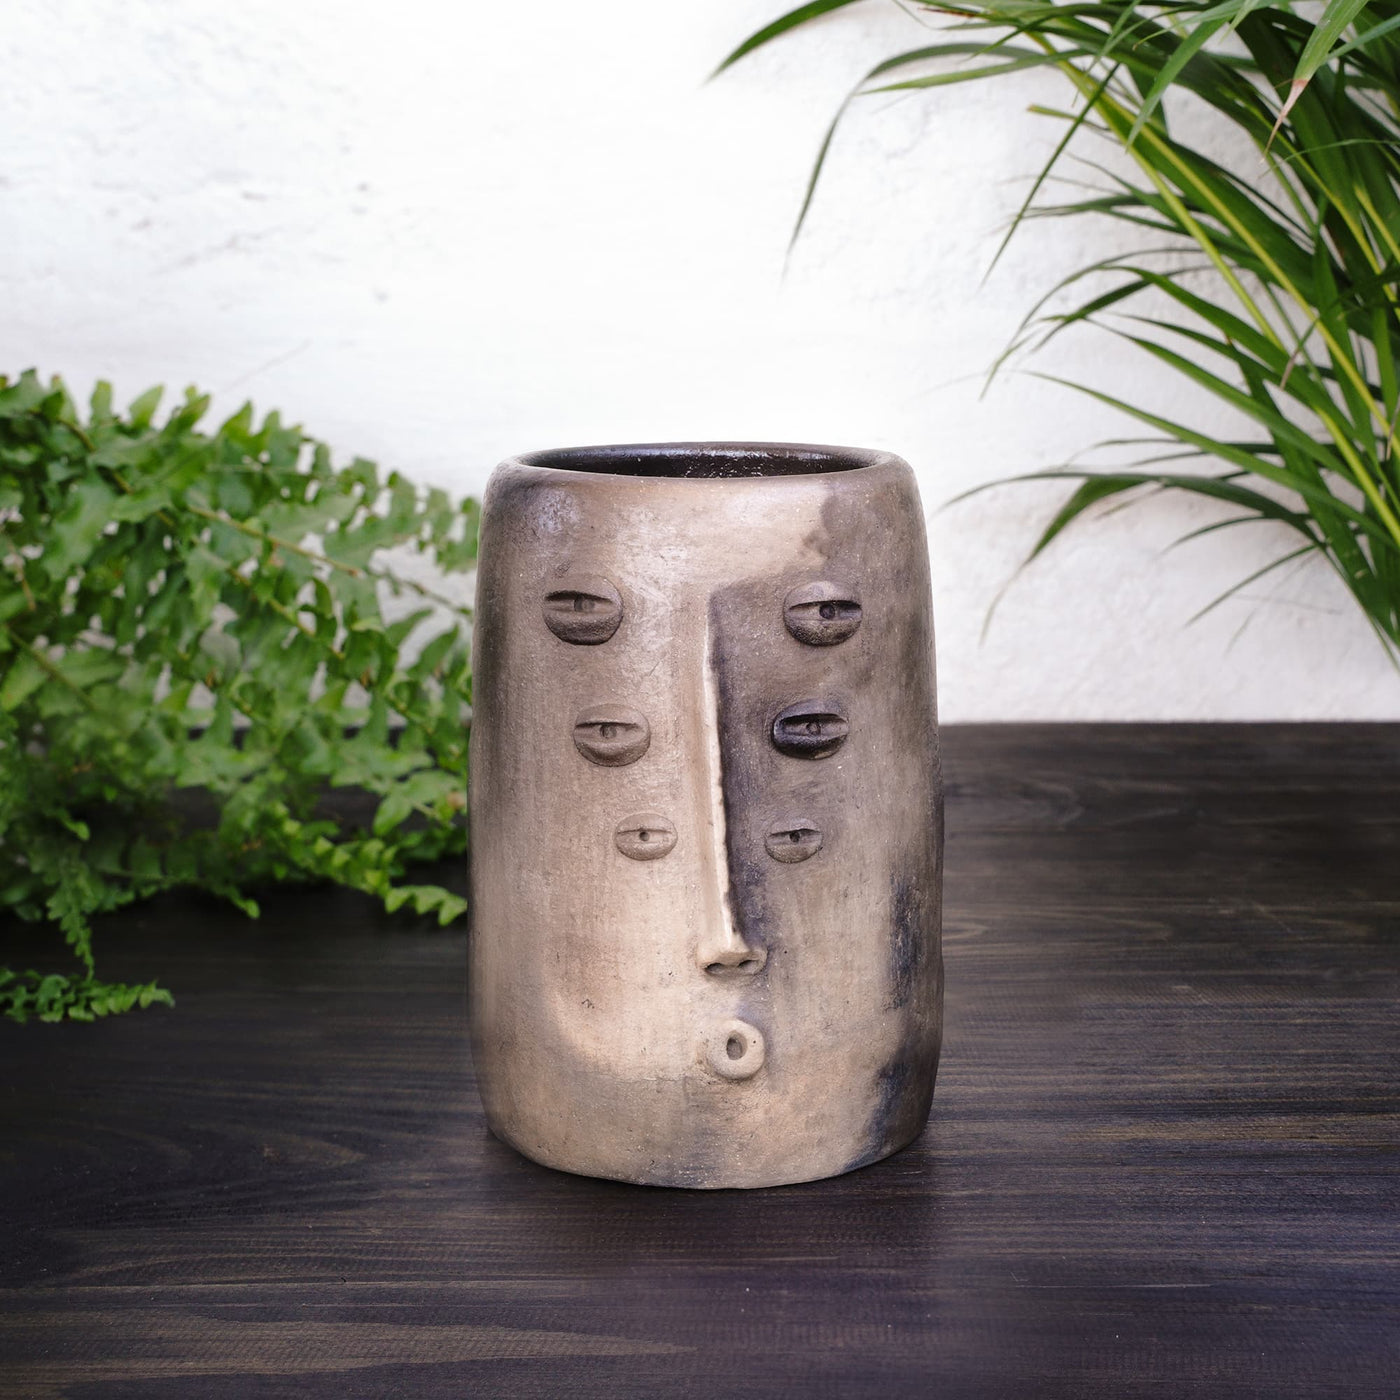 Tall, boho-style vase, showcasing its handcrafted design and elegant shape